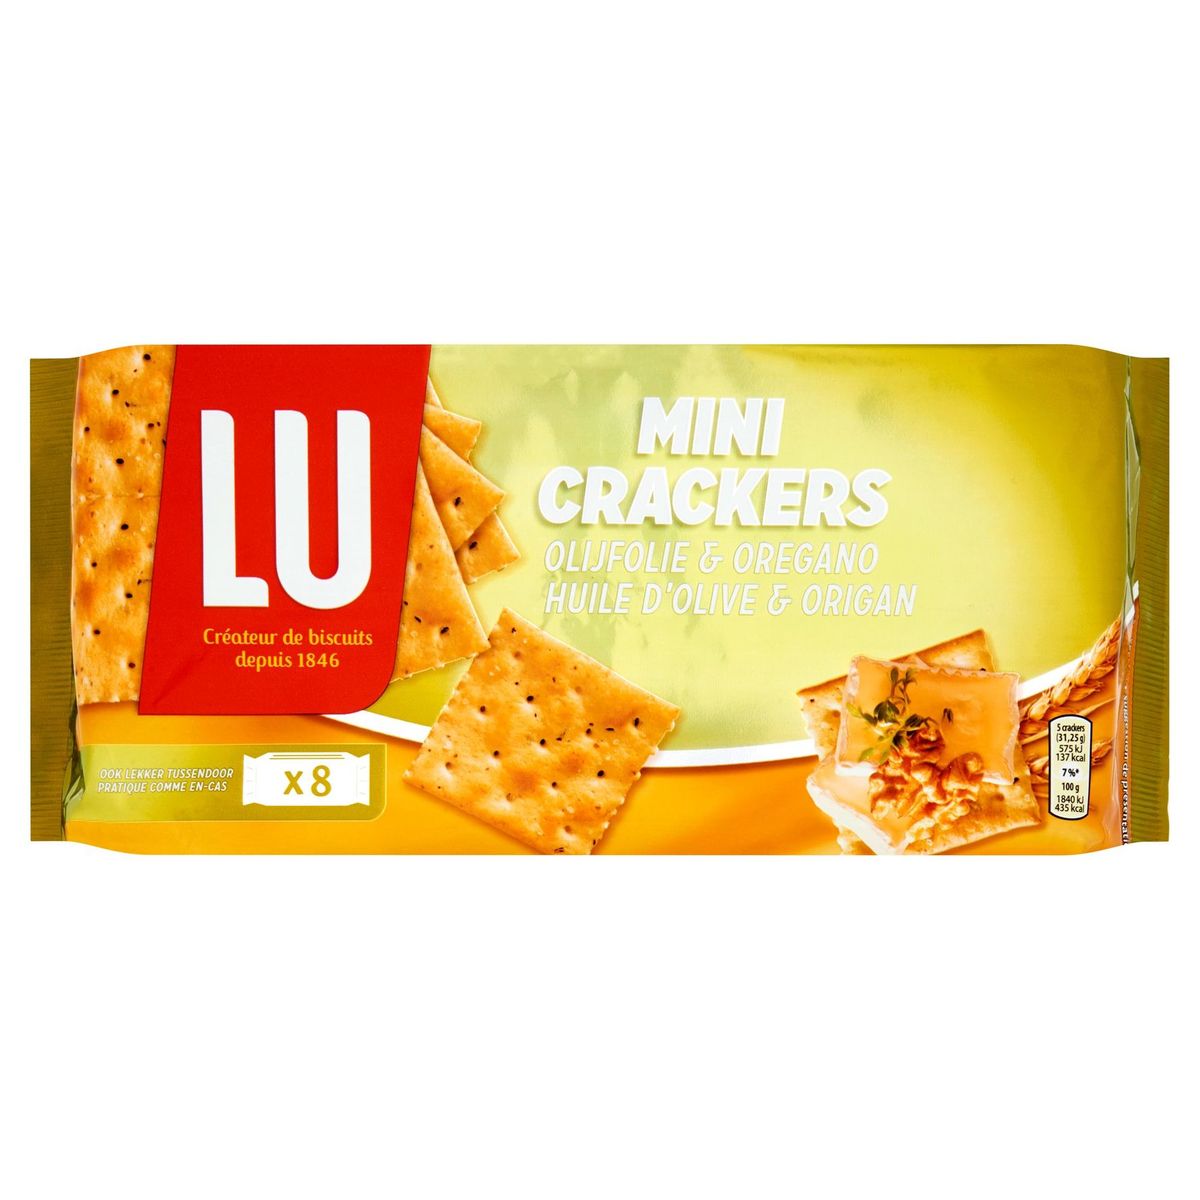 LU Mini Crackers Toastss Huile d'Olive & Origan 8 Sachets 250 g